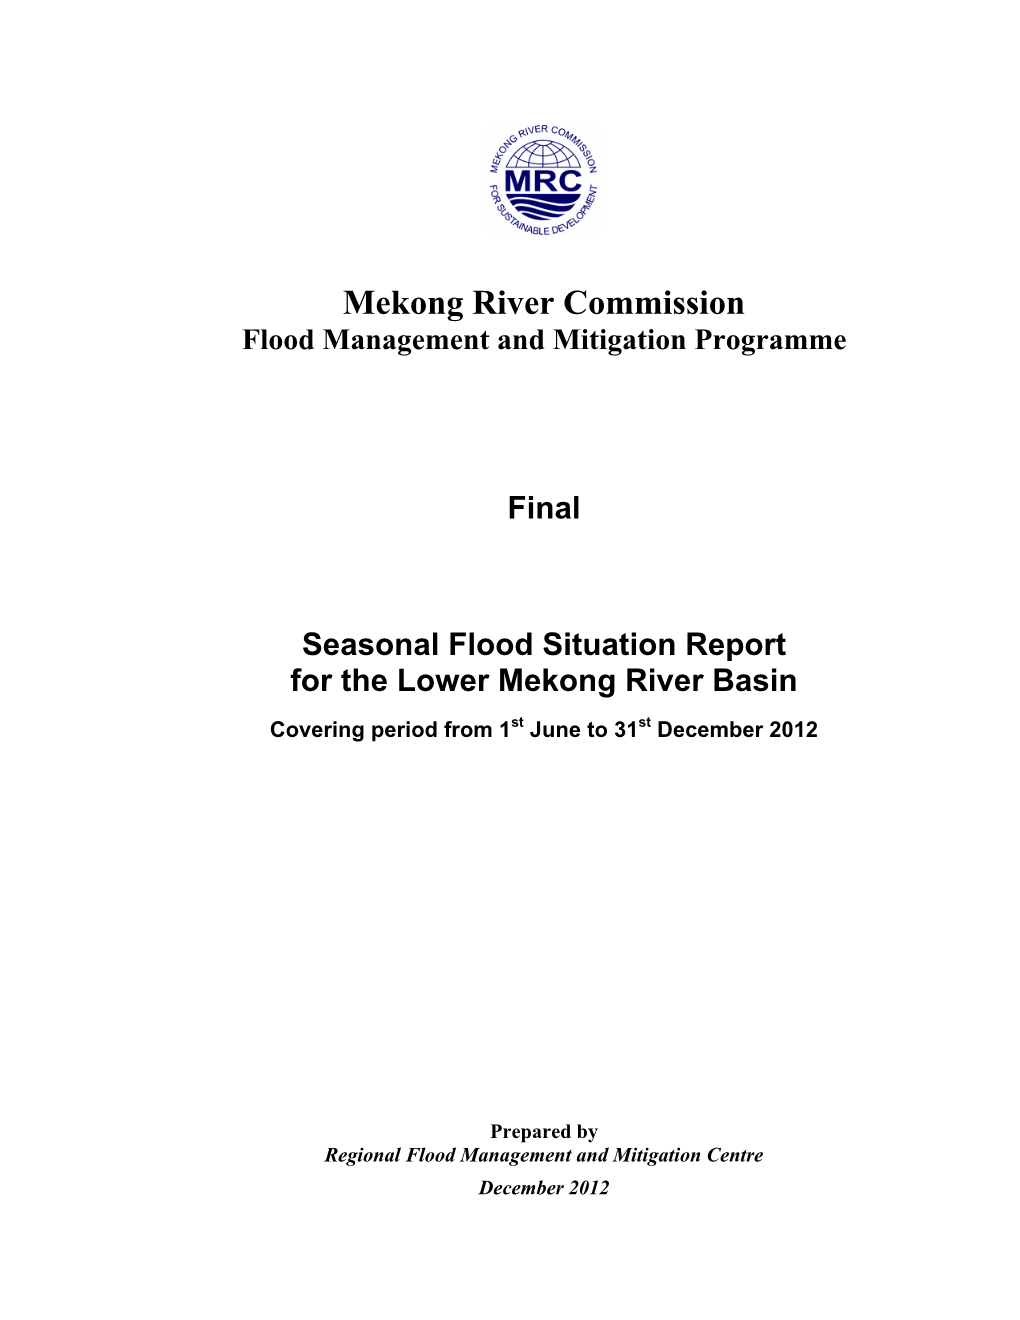 1. Flood Season 2012